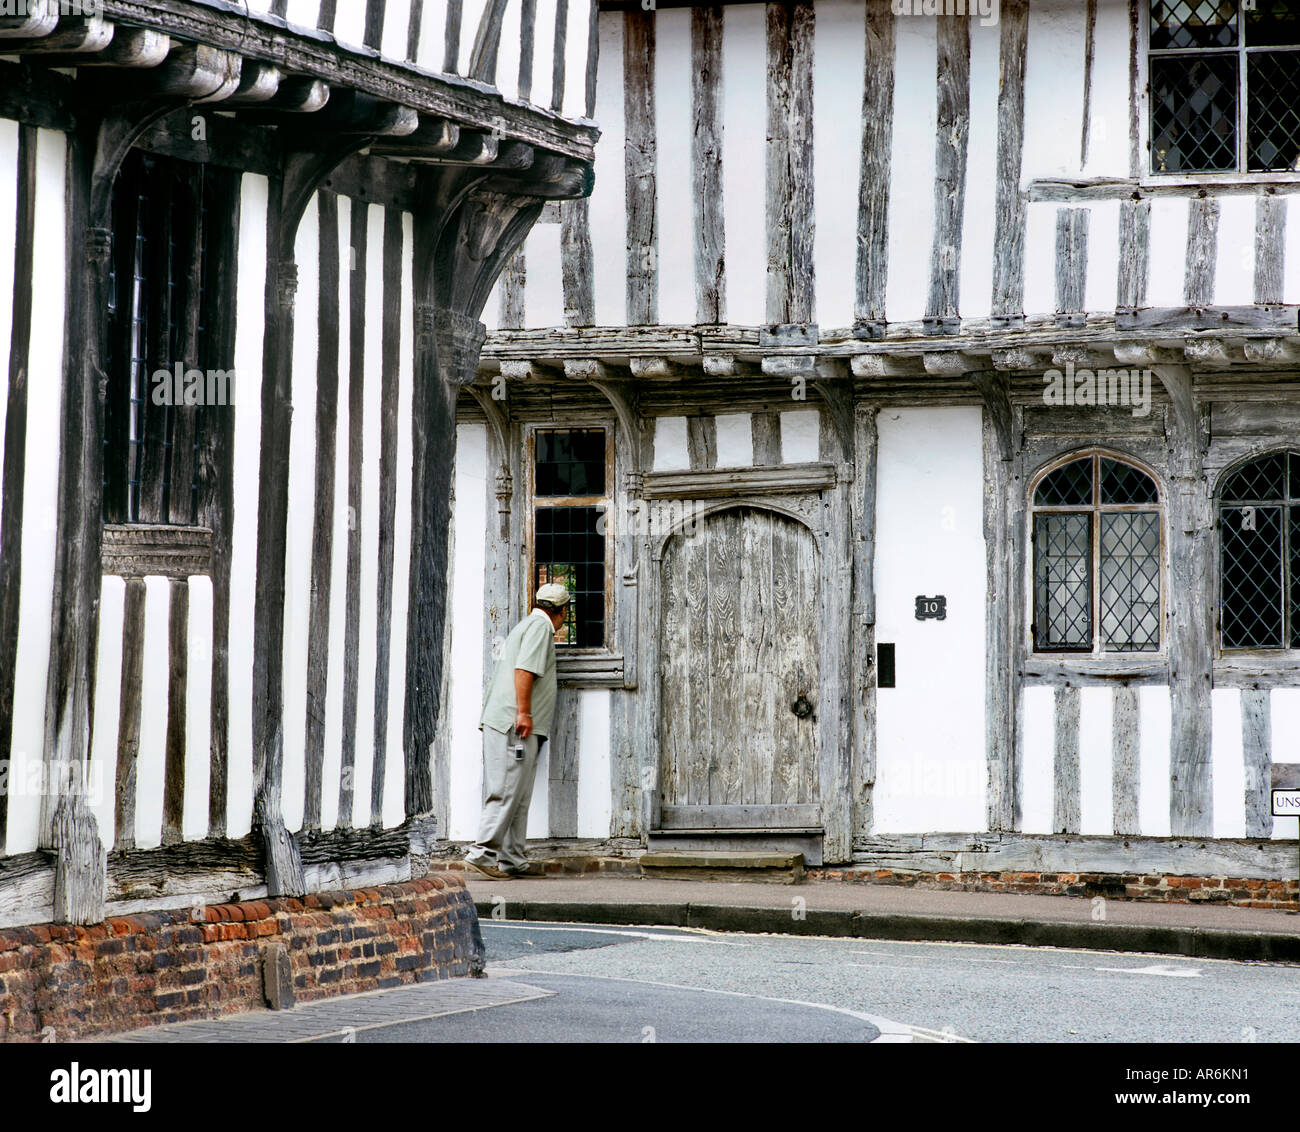 Nosy tourist peeking into old half timbered buildings in School Lane, Lavenham, Suffolk. Stock Photo